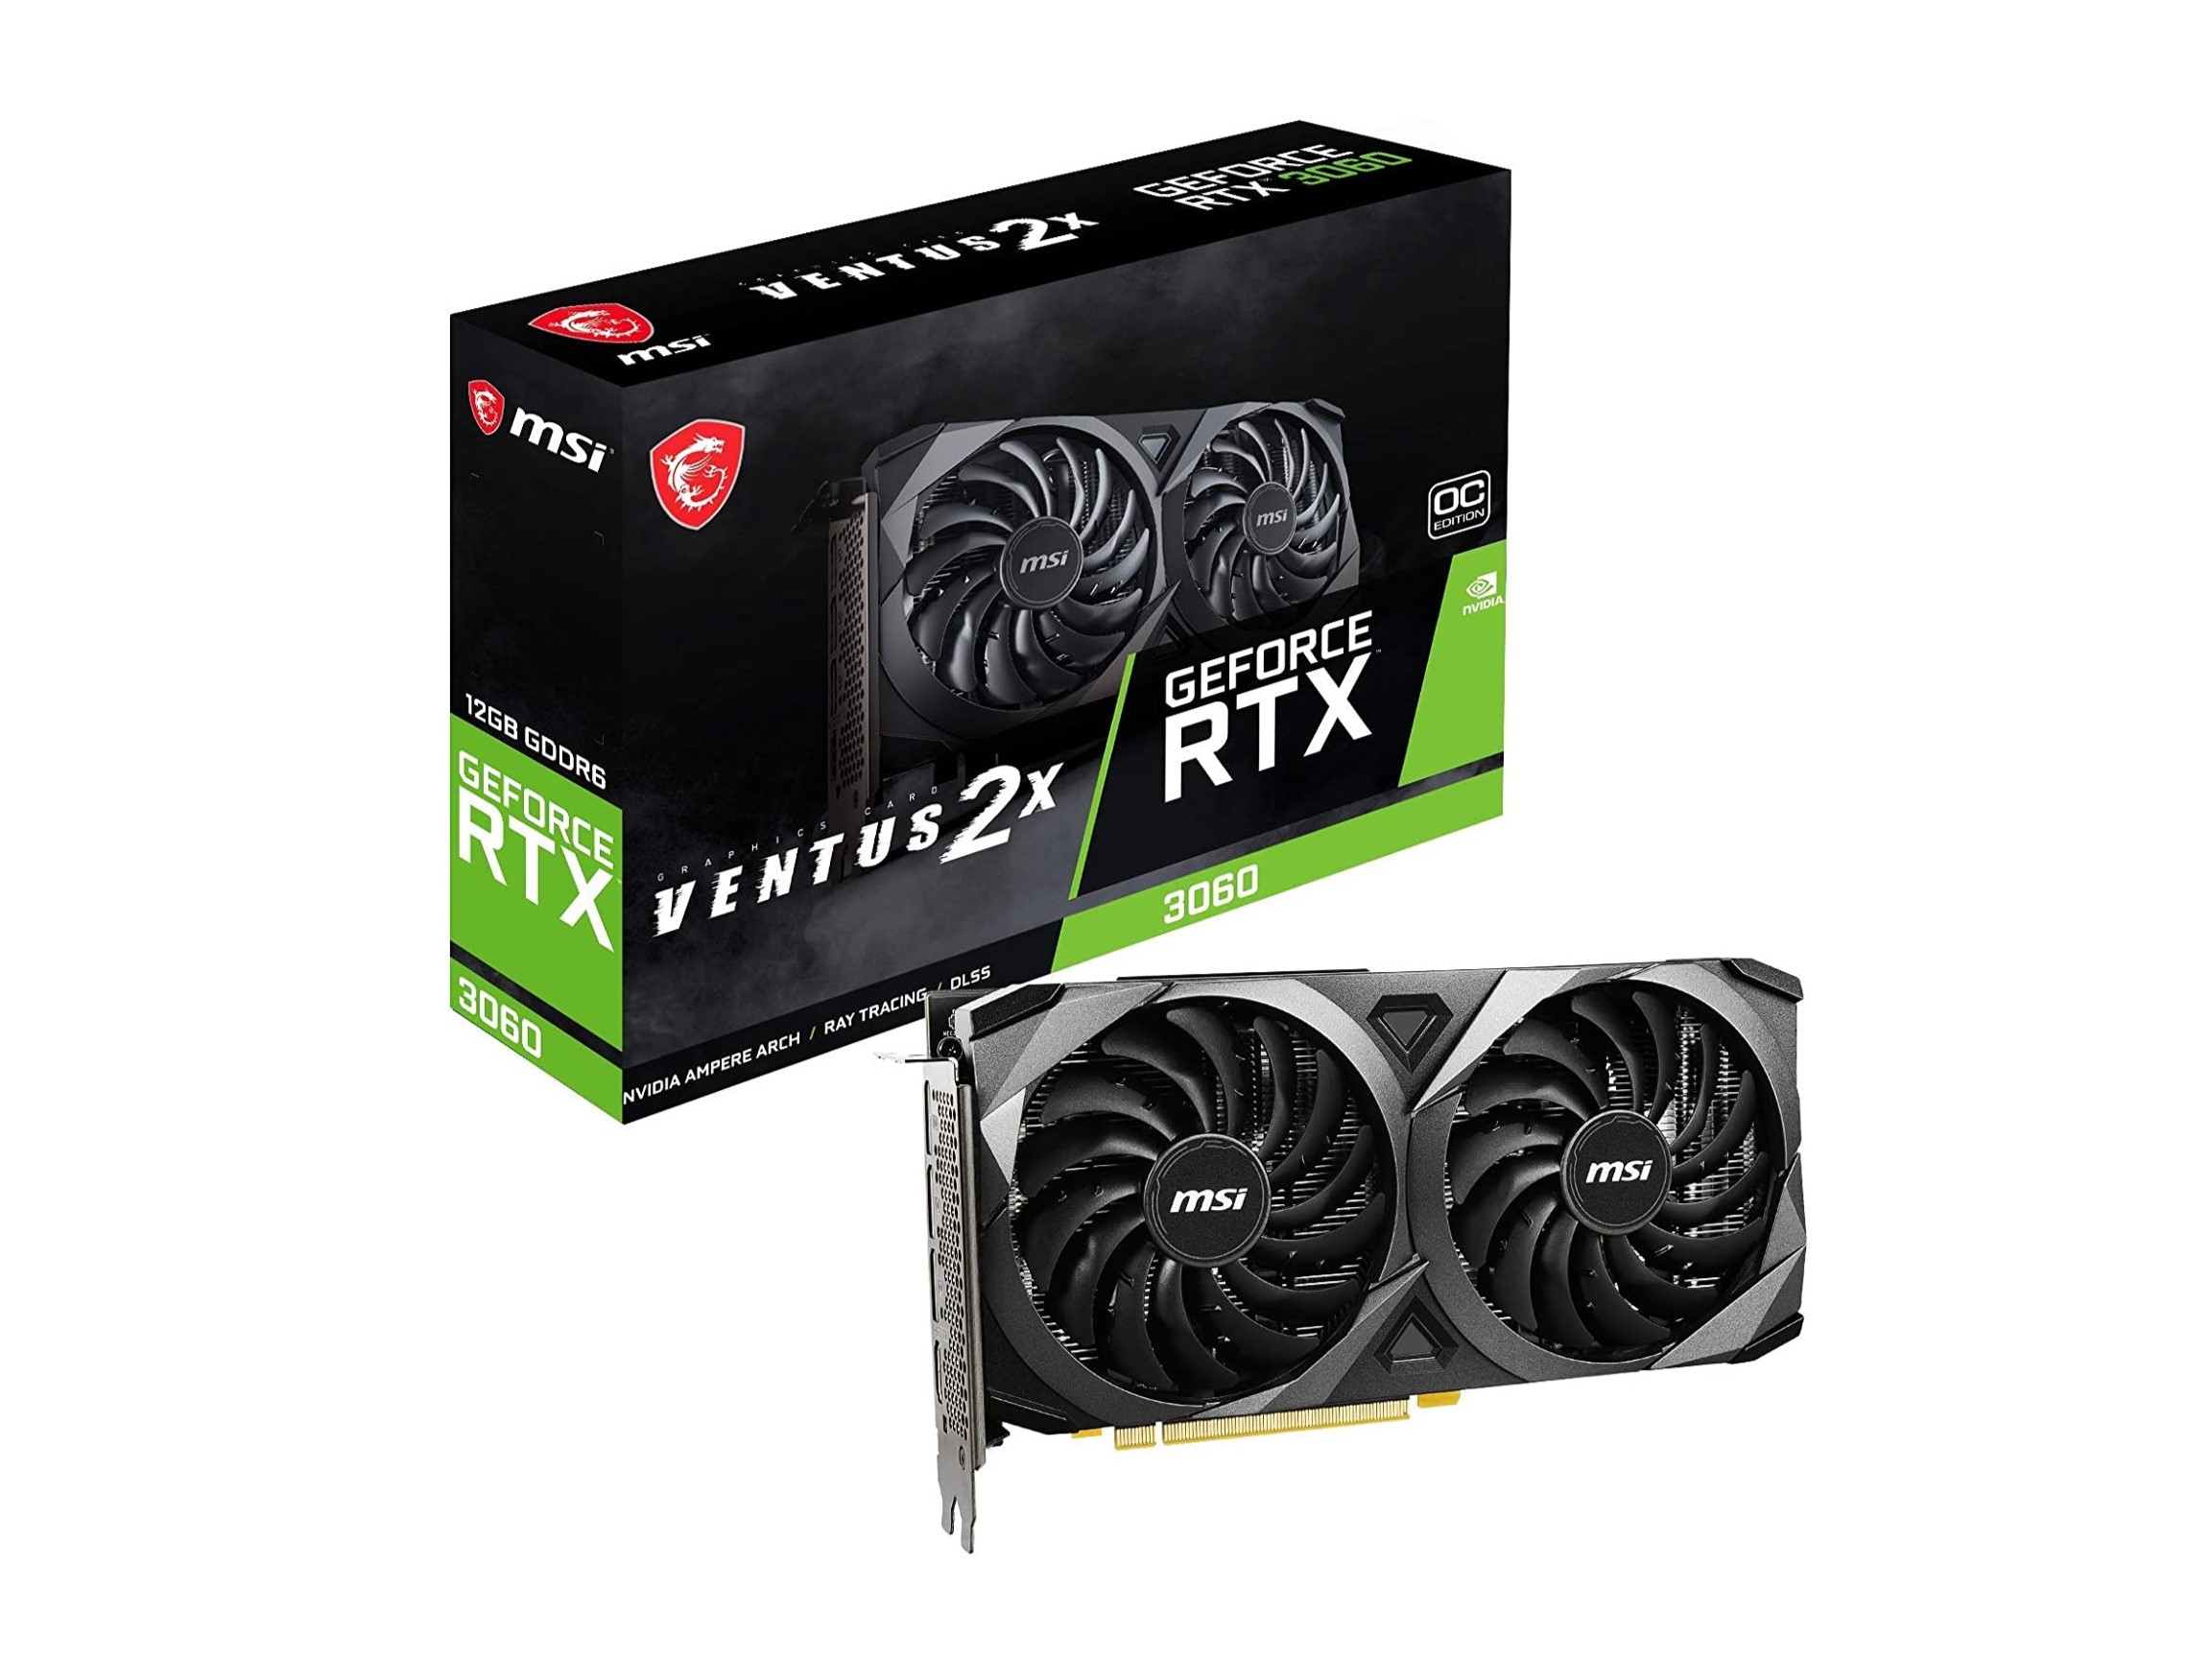 MSI GeForce RTX 3060 Ventus 2X GPU and box.